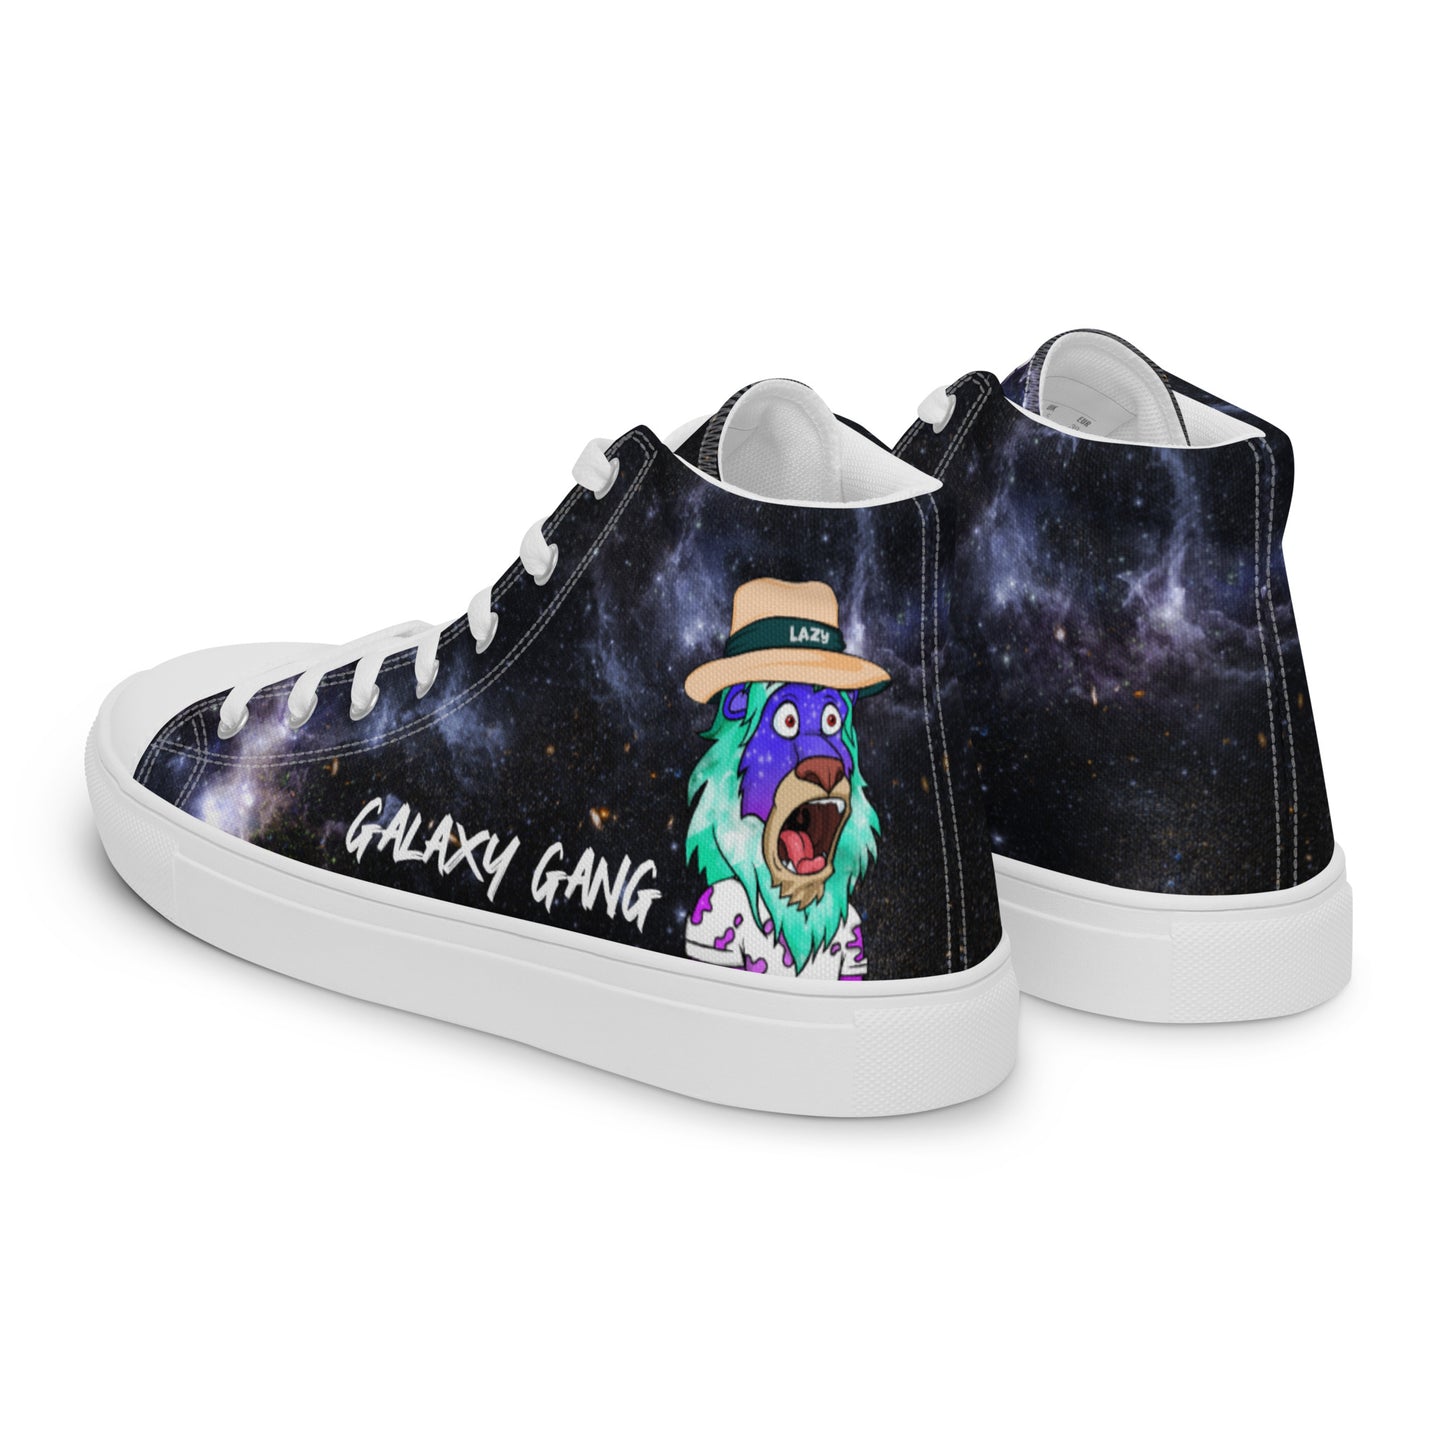 Galaxy Gang - MegaHz Custom Shoe